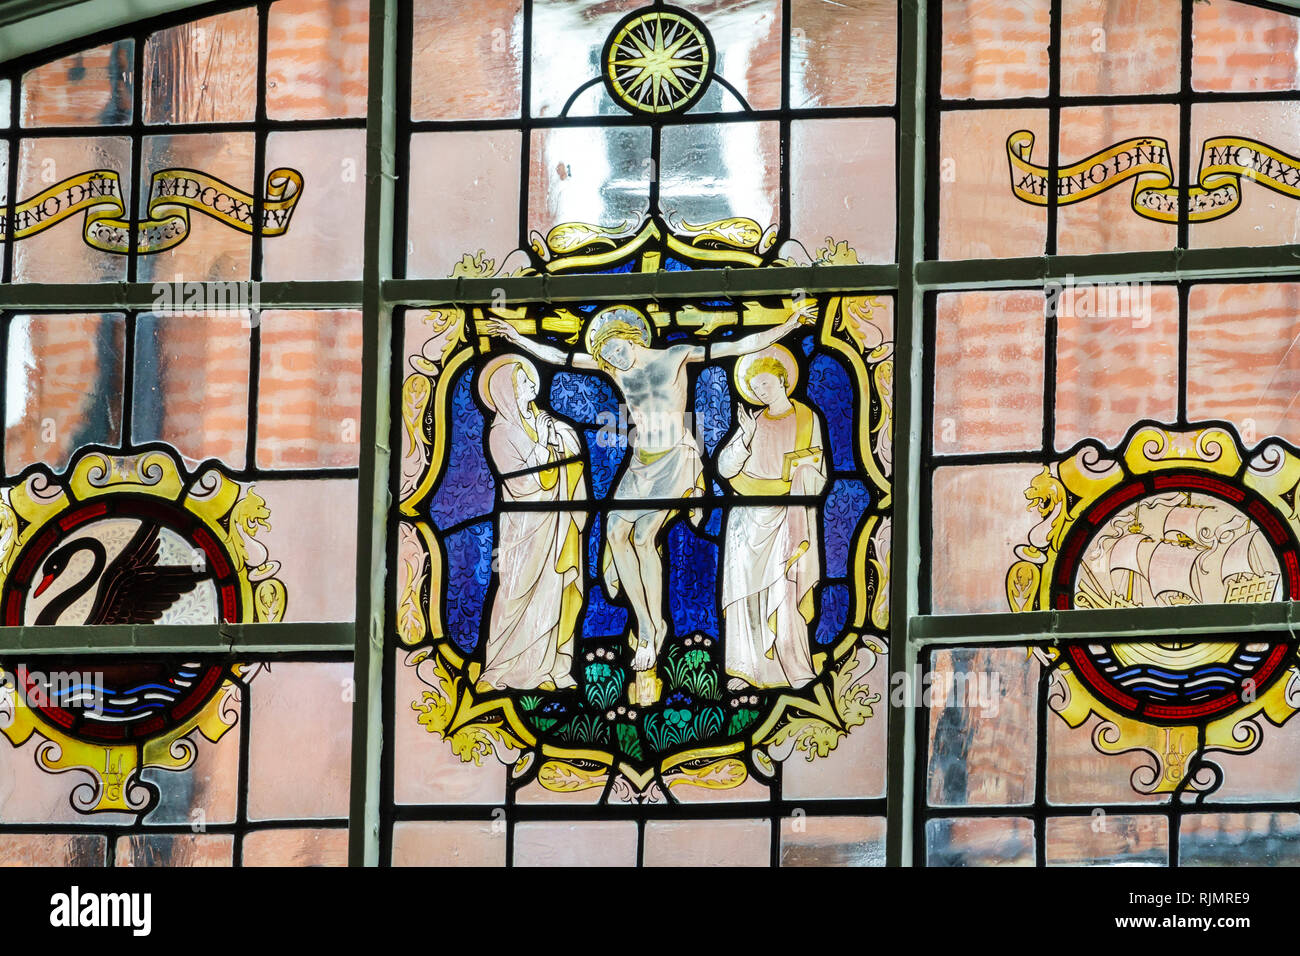 Vereinigtes Königreich Großbritannien England London Westminster Mayfair Grosvenor Chapel Anglikanische Kirche innen Buntglasfenster Sightseeing vis Stockfoto